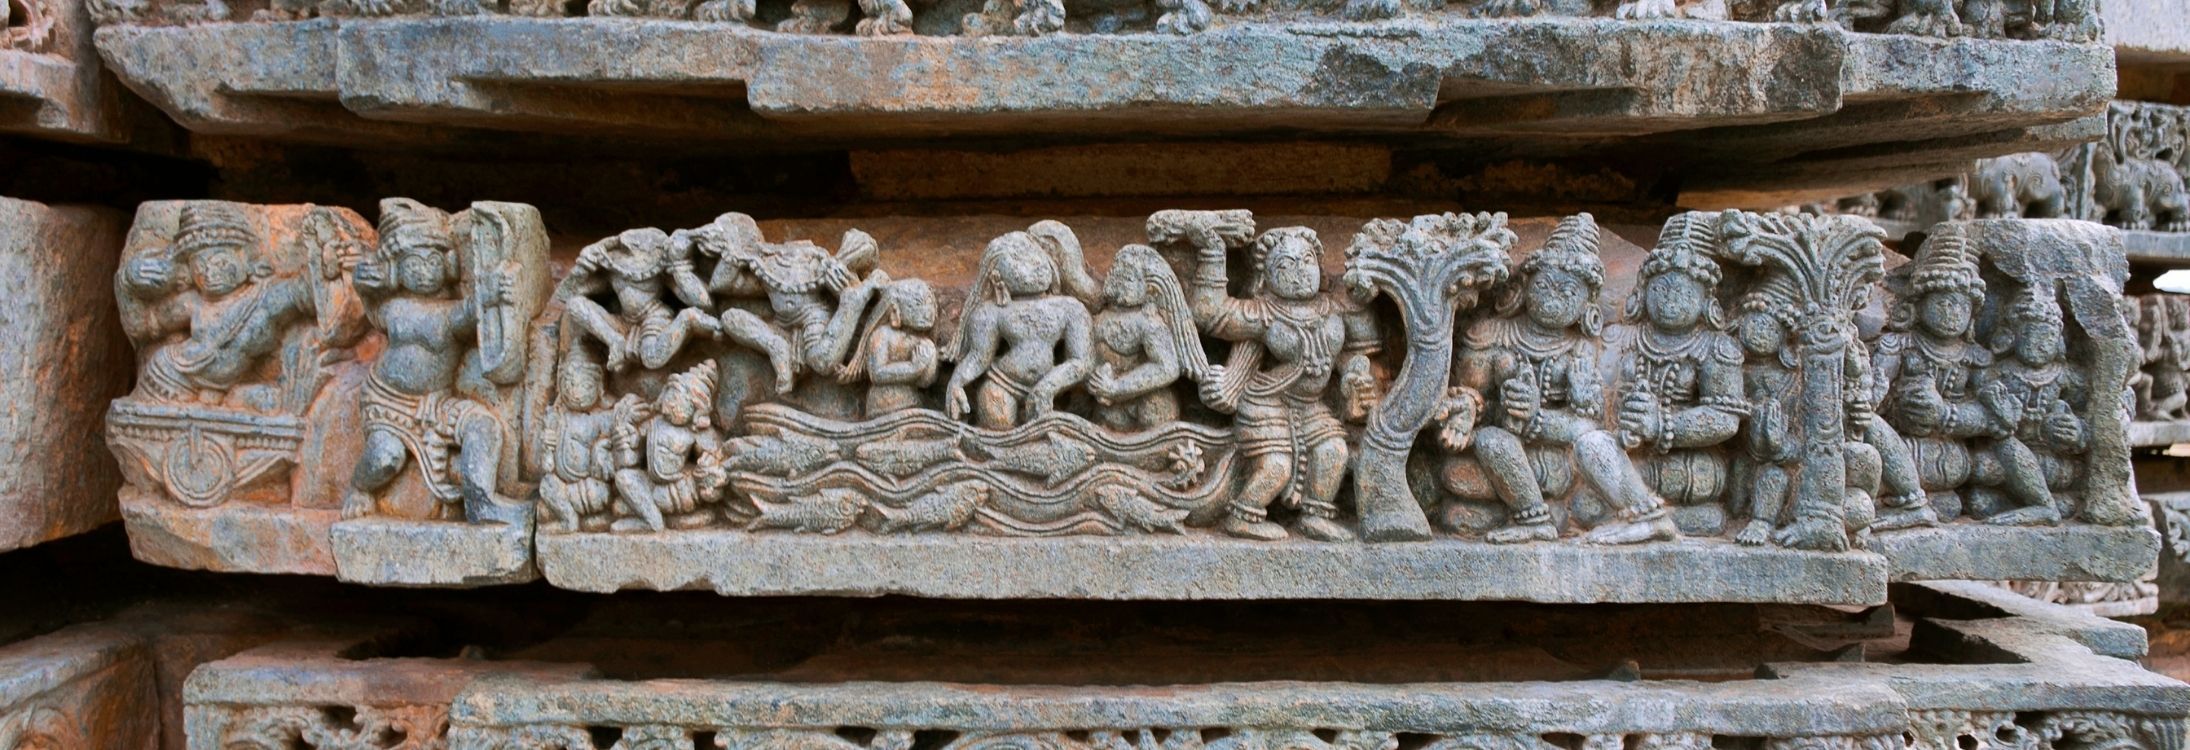 Bas-relief depicting a scene of Mahabharata